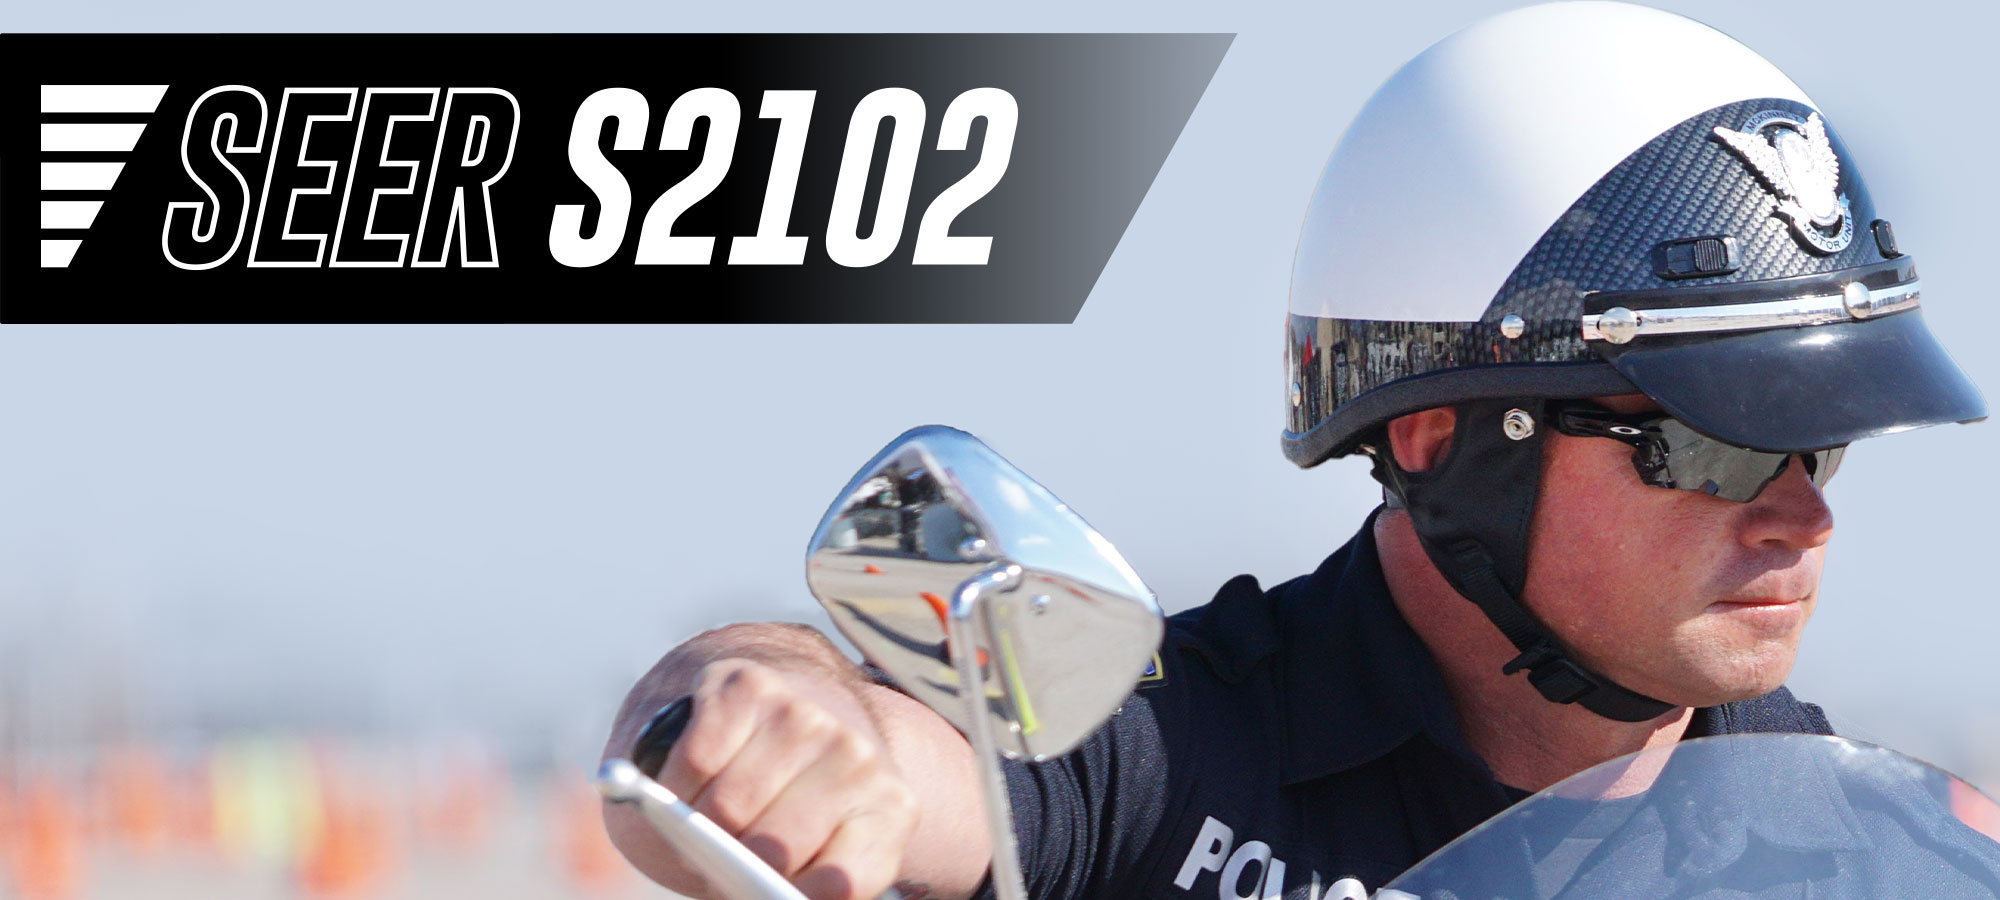 Super Seer S2102 Carbon Fiber Police Motorcycle Helmet